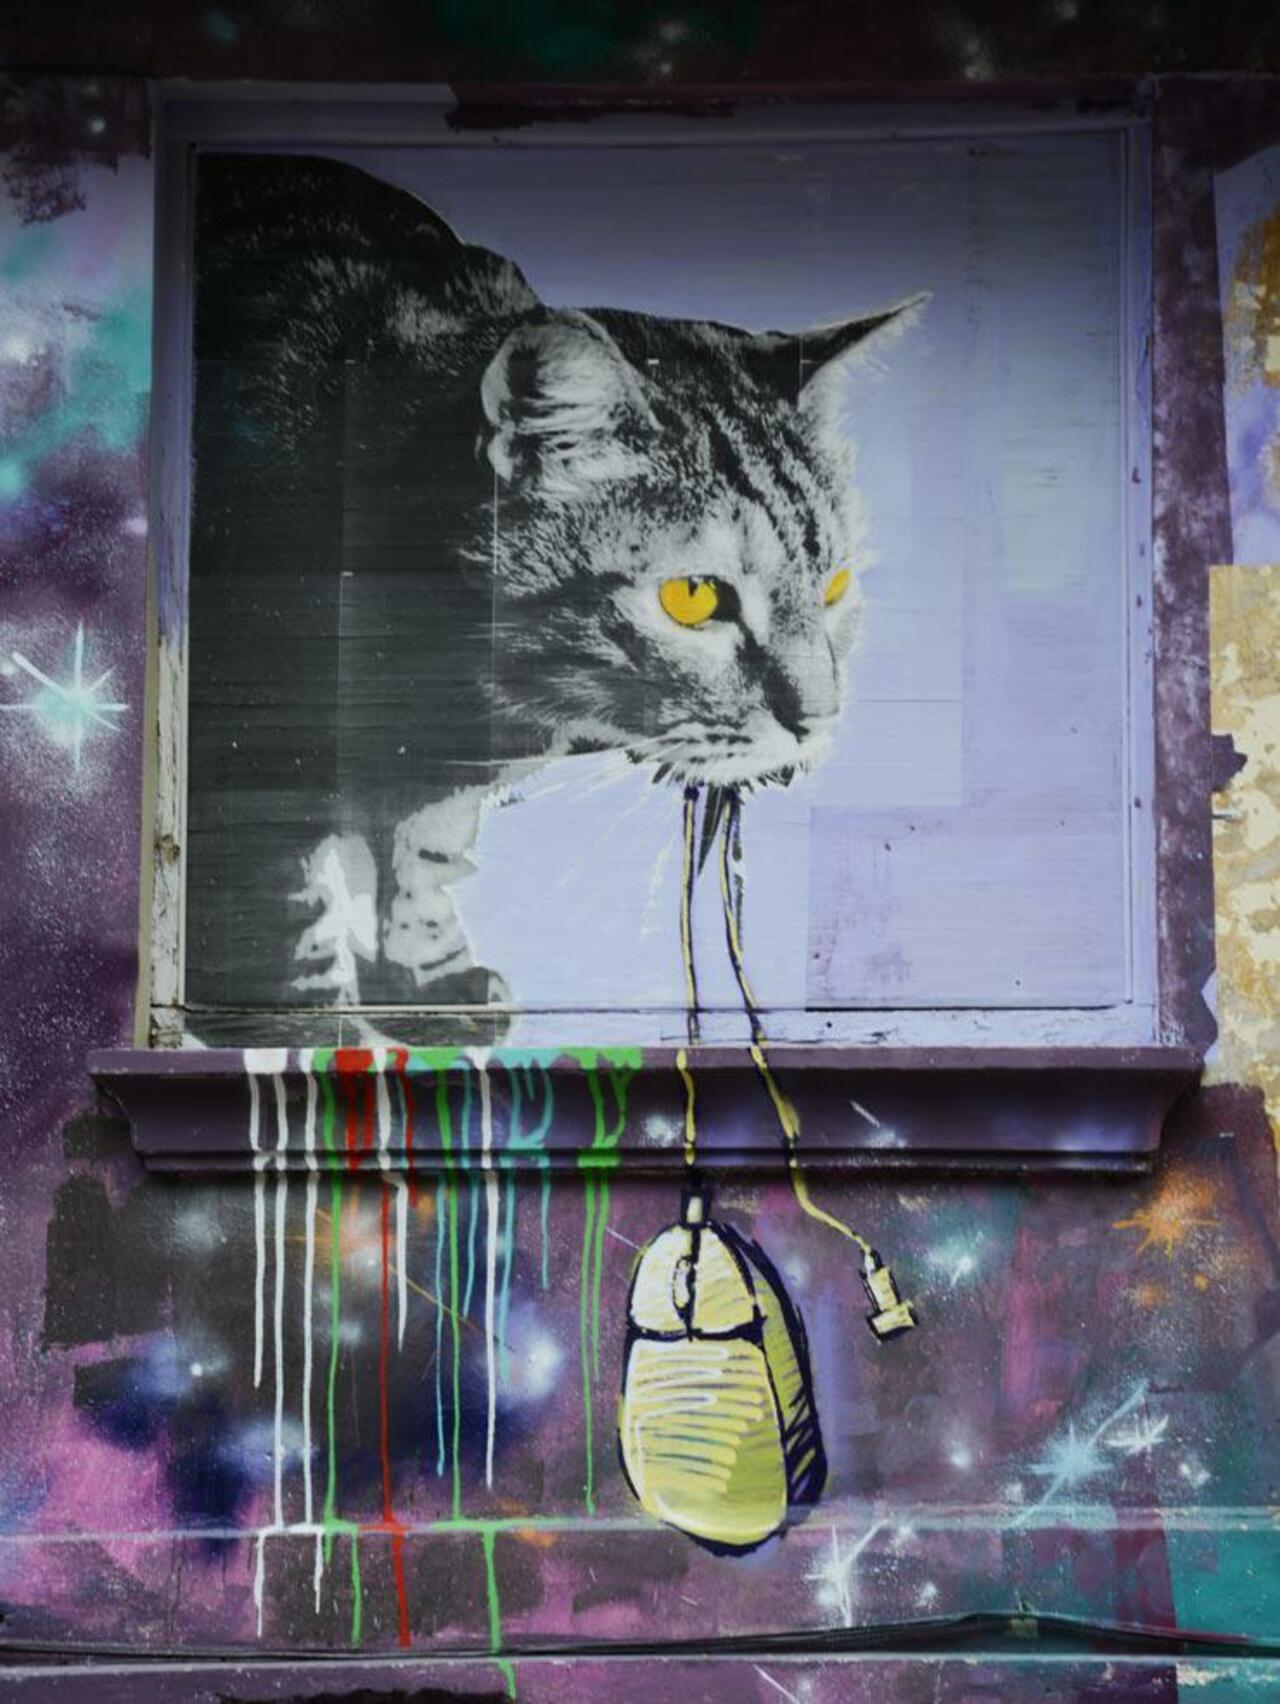 Cat w/ mouse. Pamplona, Spain
#streetart #urbanart #graffiti http://t.co/v2mGXR2KEm